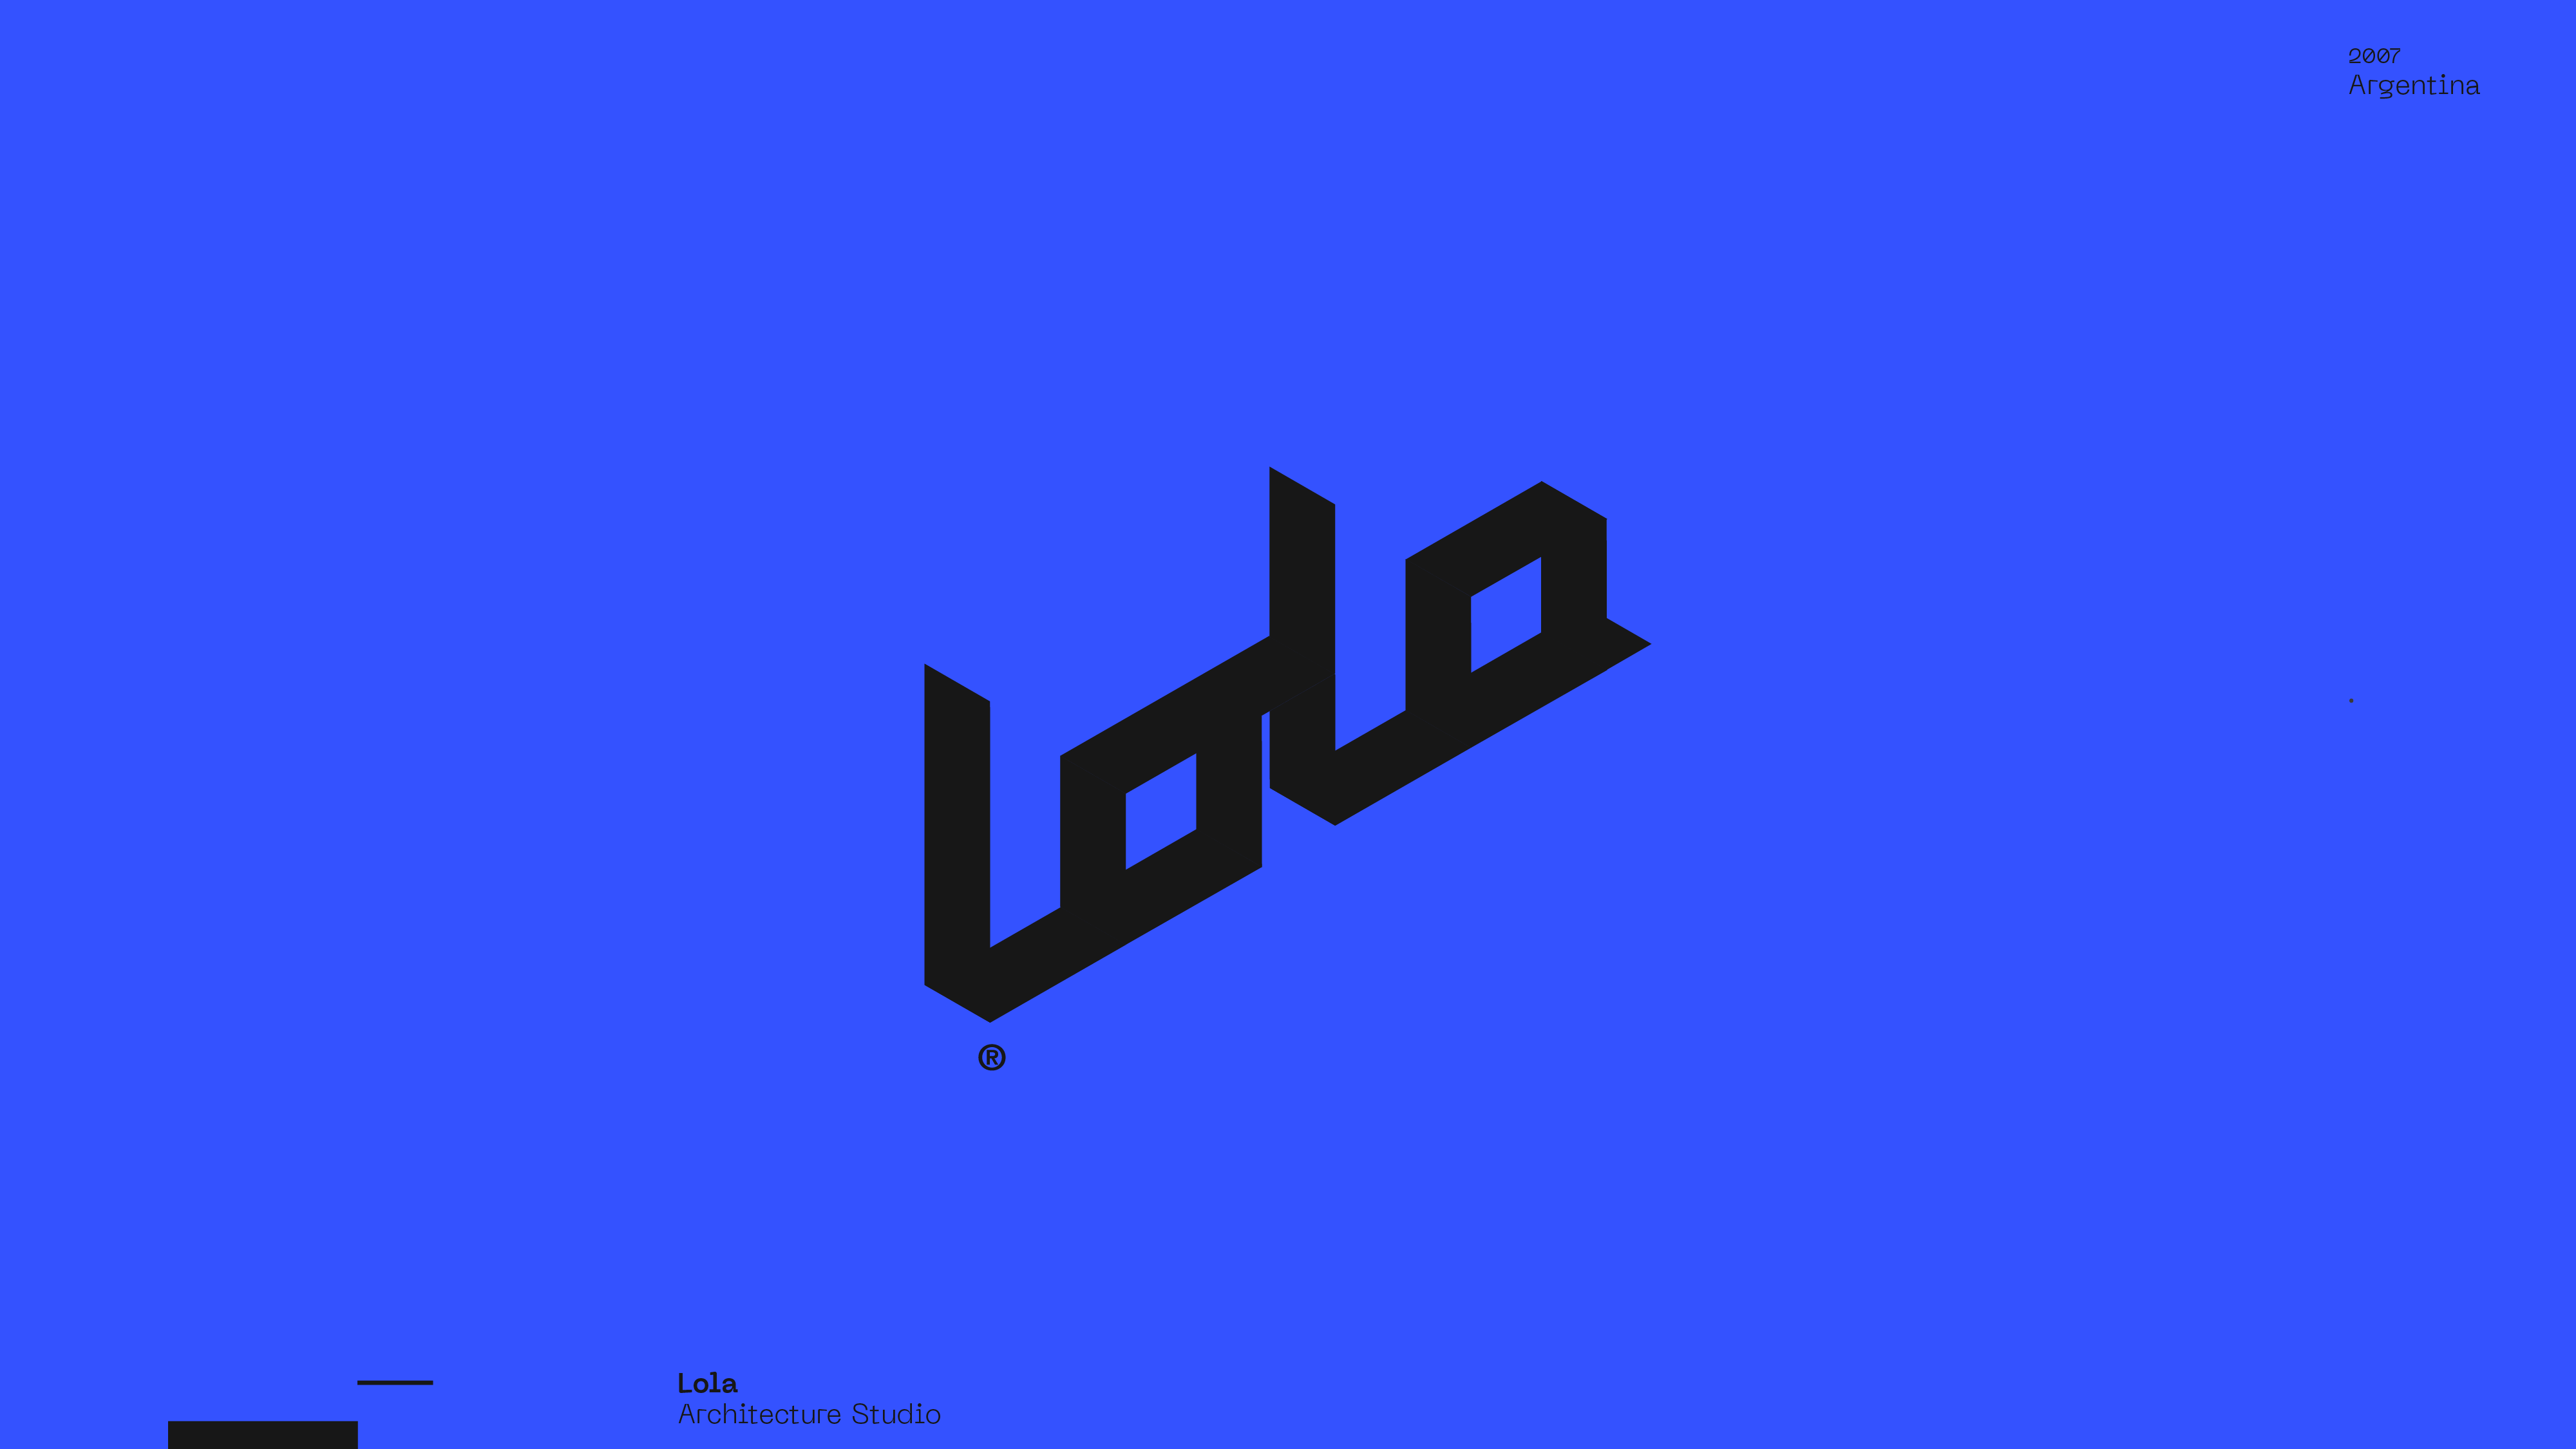 Guapo Design Studio by Esteban Ibarra Logofolio 2005 2010 logo designer